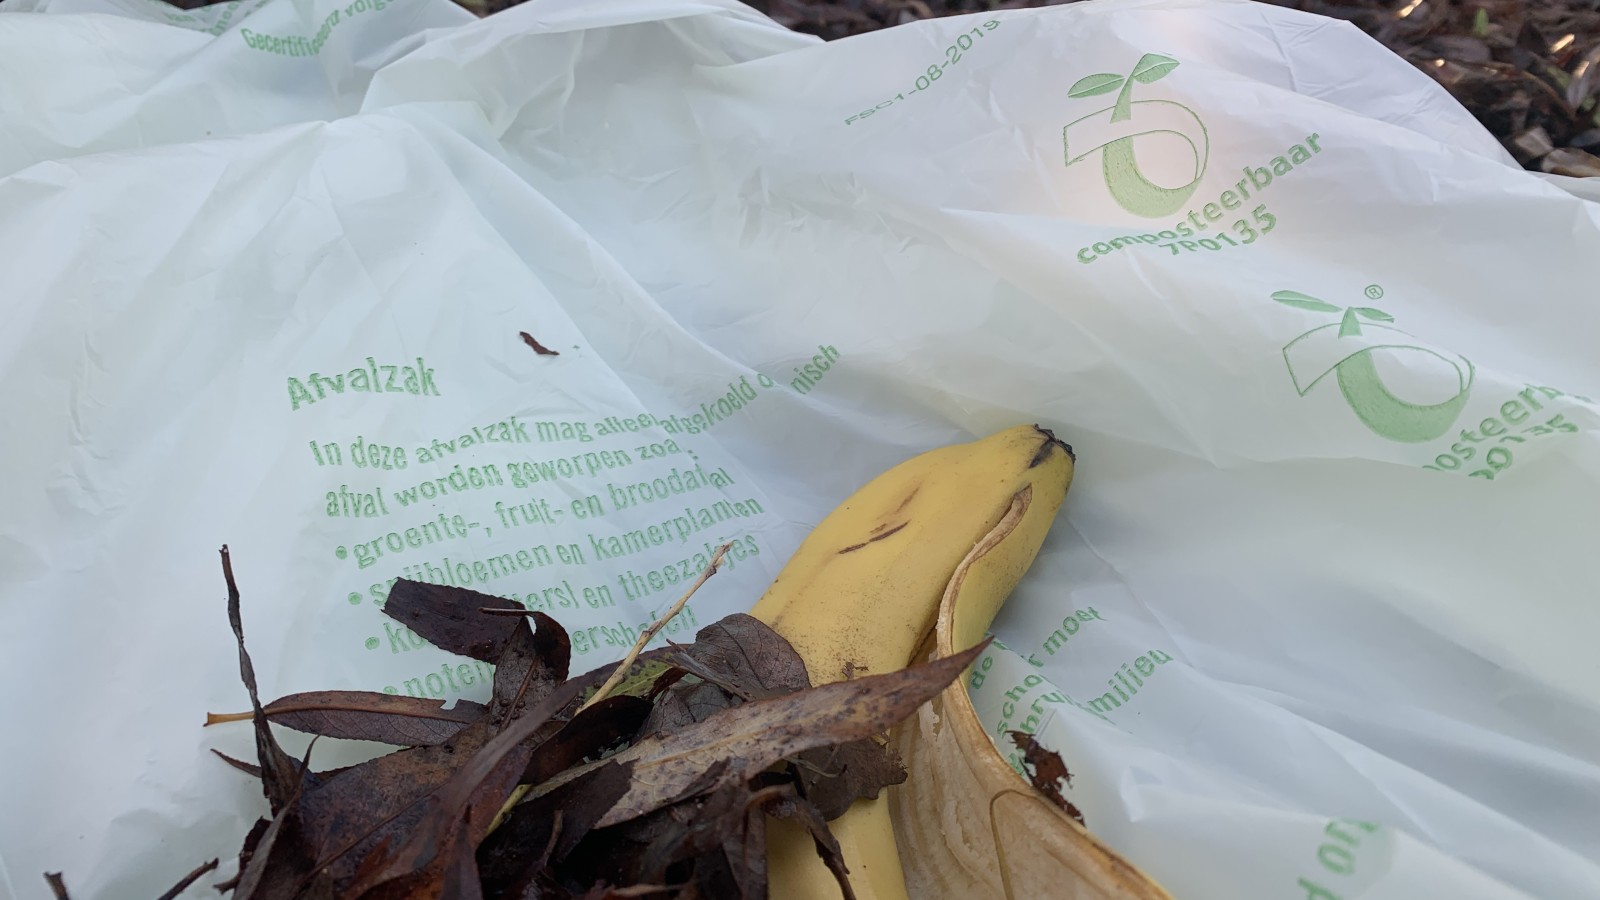 Verzorger Zonnig Rouwen Bio-afbreekbare plastic zakjes vervuilen compost - NH Nieuws